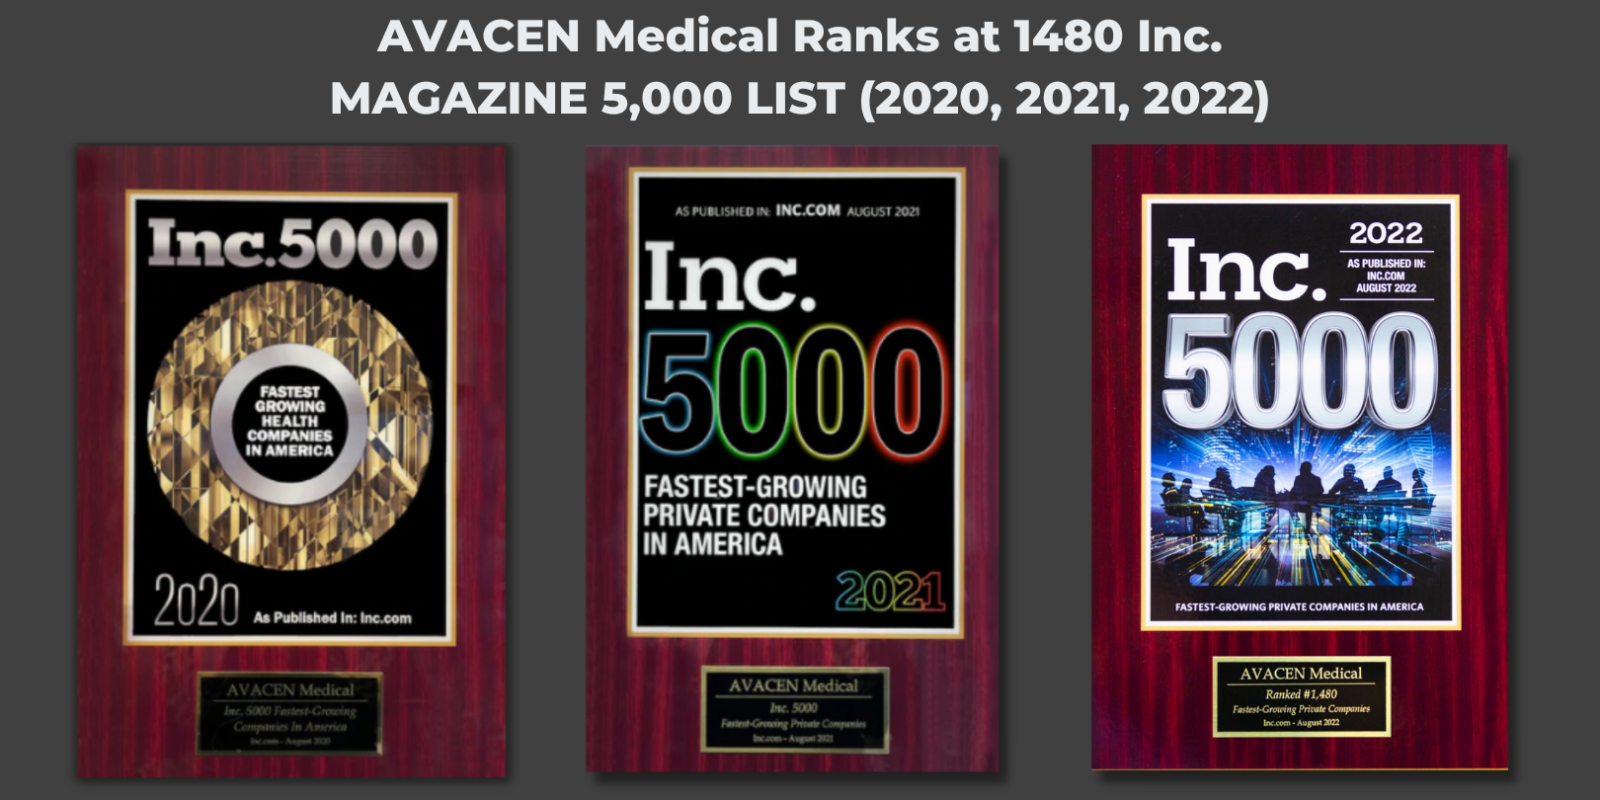 AVACEN Inc 5000 List three years in a row